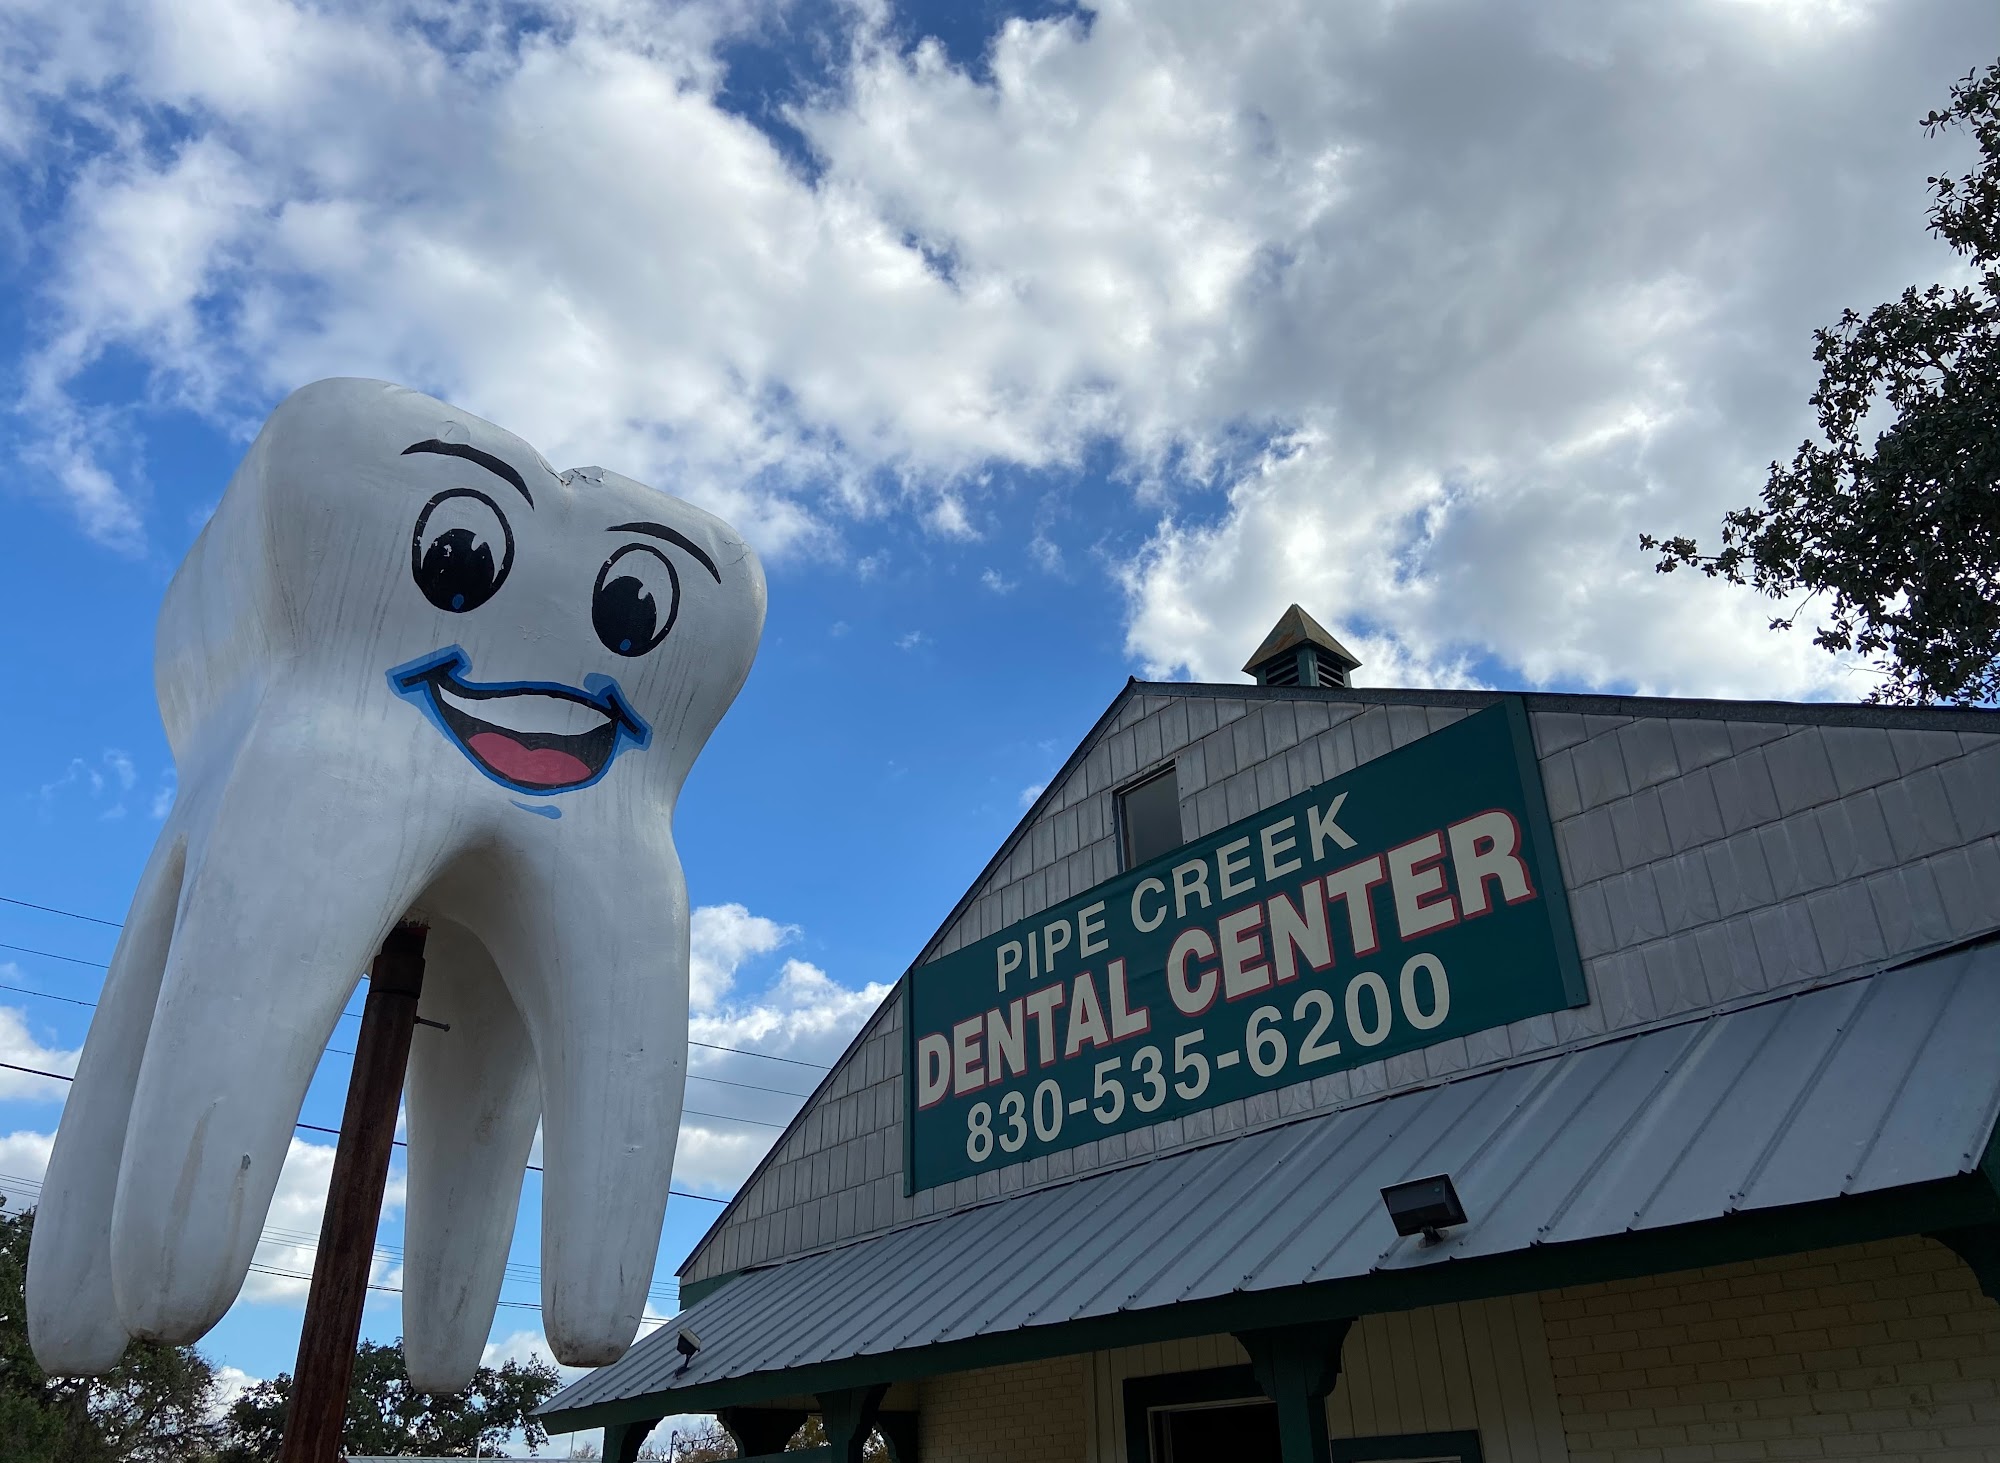 Pipe Creek Dental Center 9782 TX-16, Pipe Creek Texas 78063